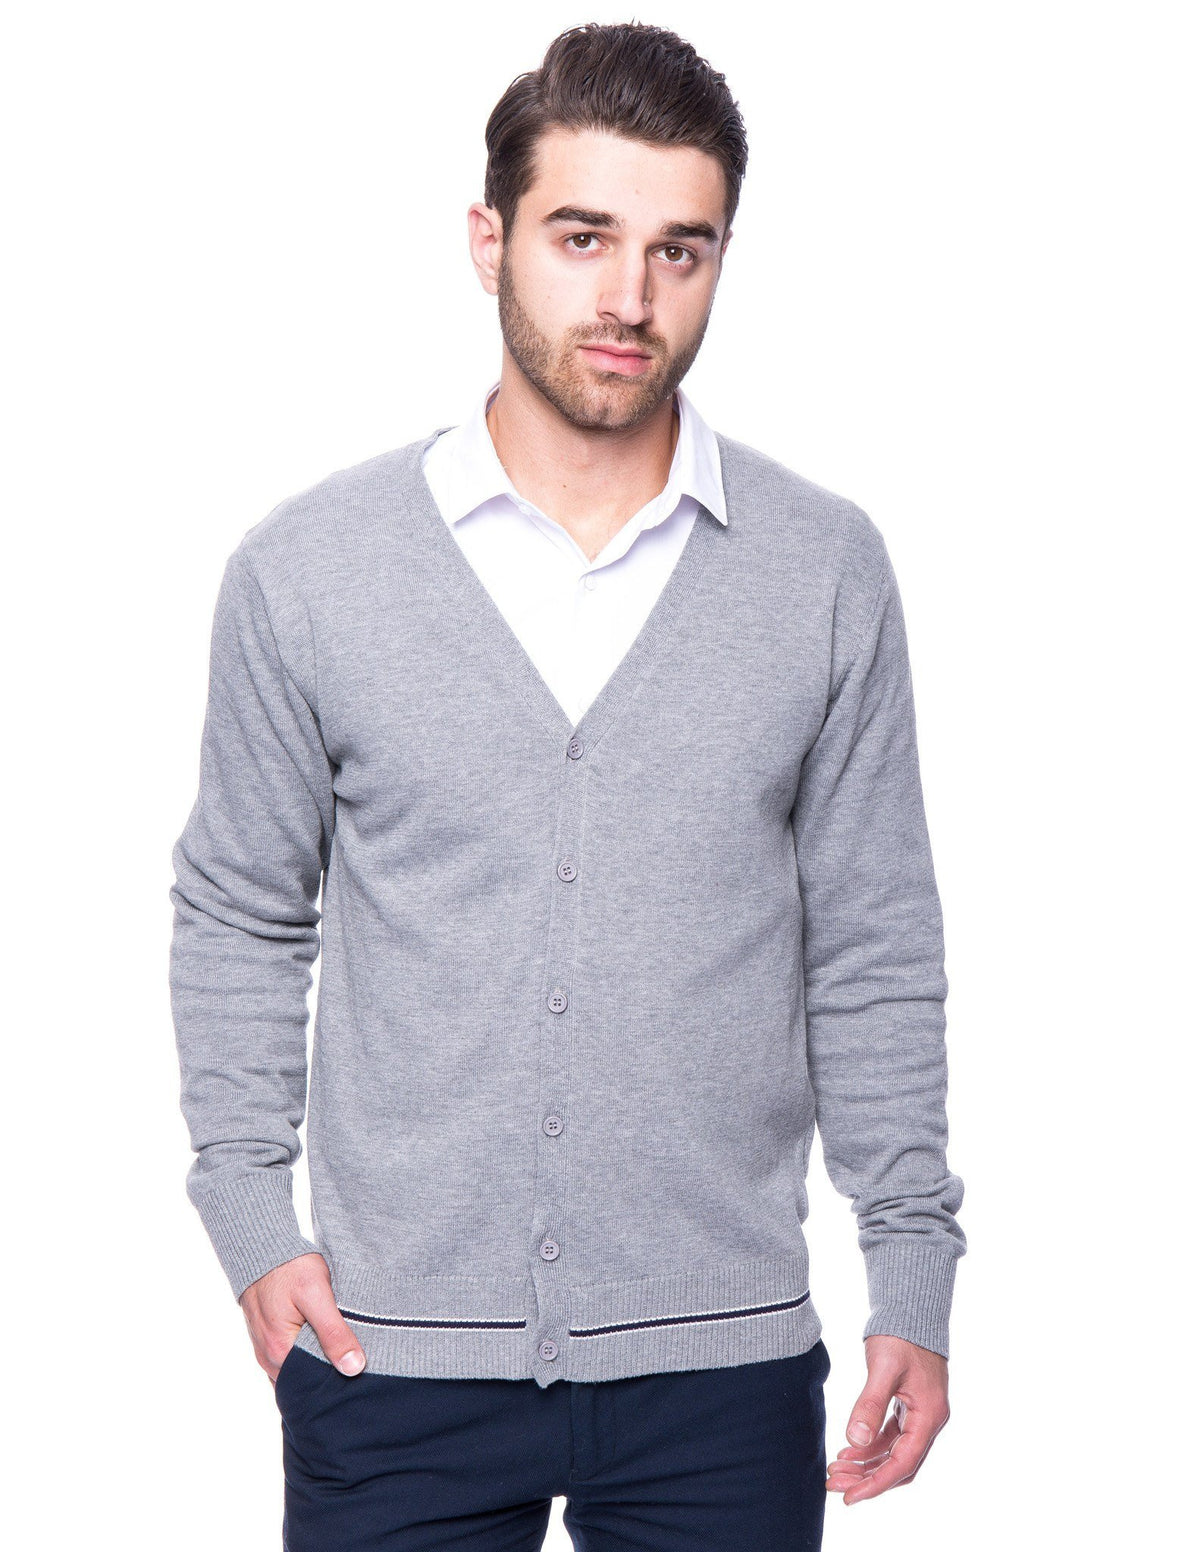 Men's 100% Cotton Cardigan Sweater - Heather Grey